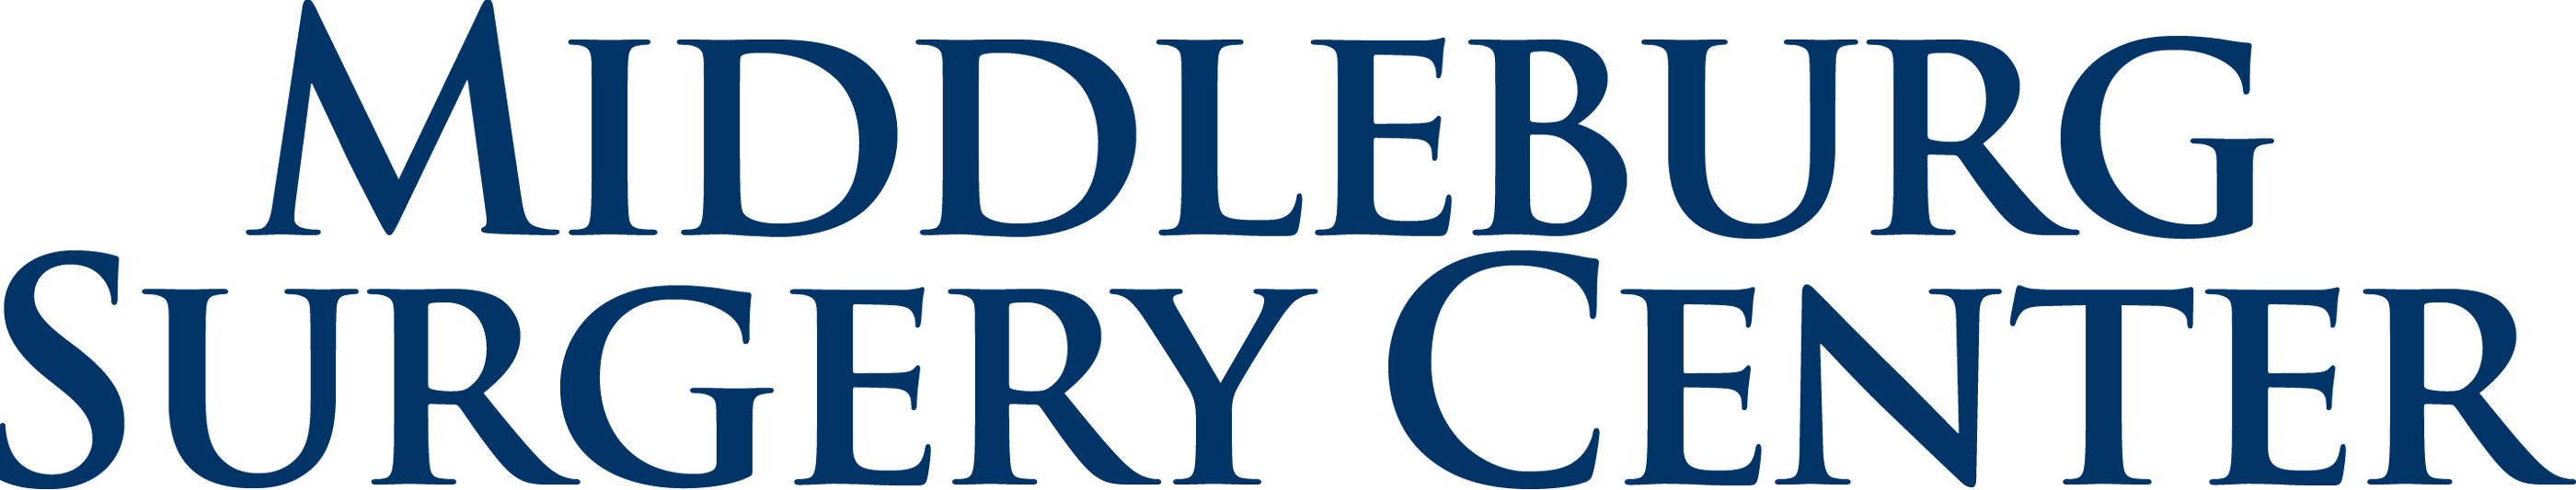 Middleburg-Surgery-Center-Logo-Blue